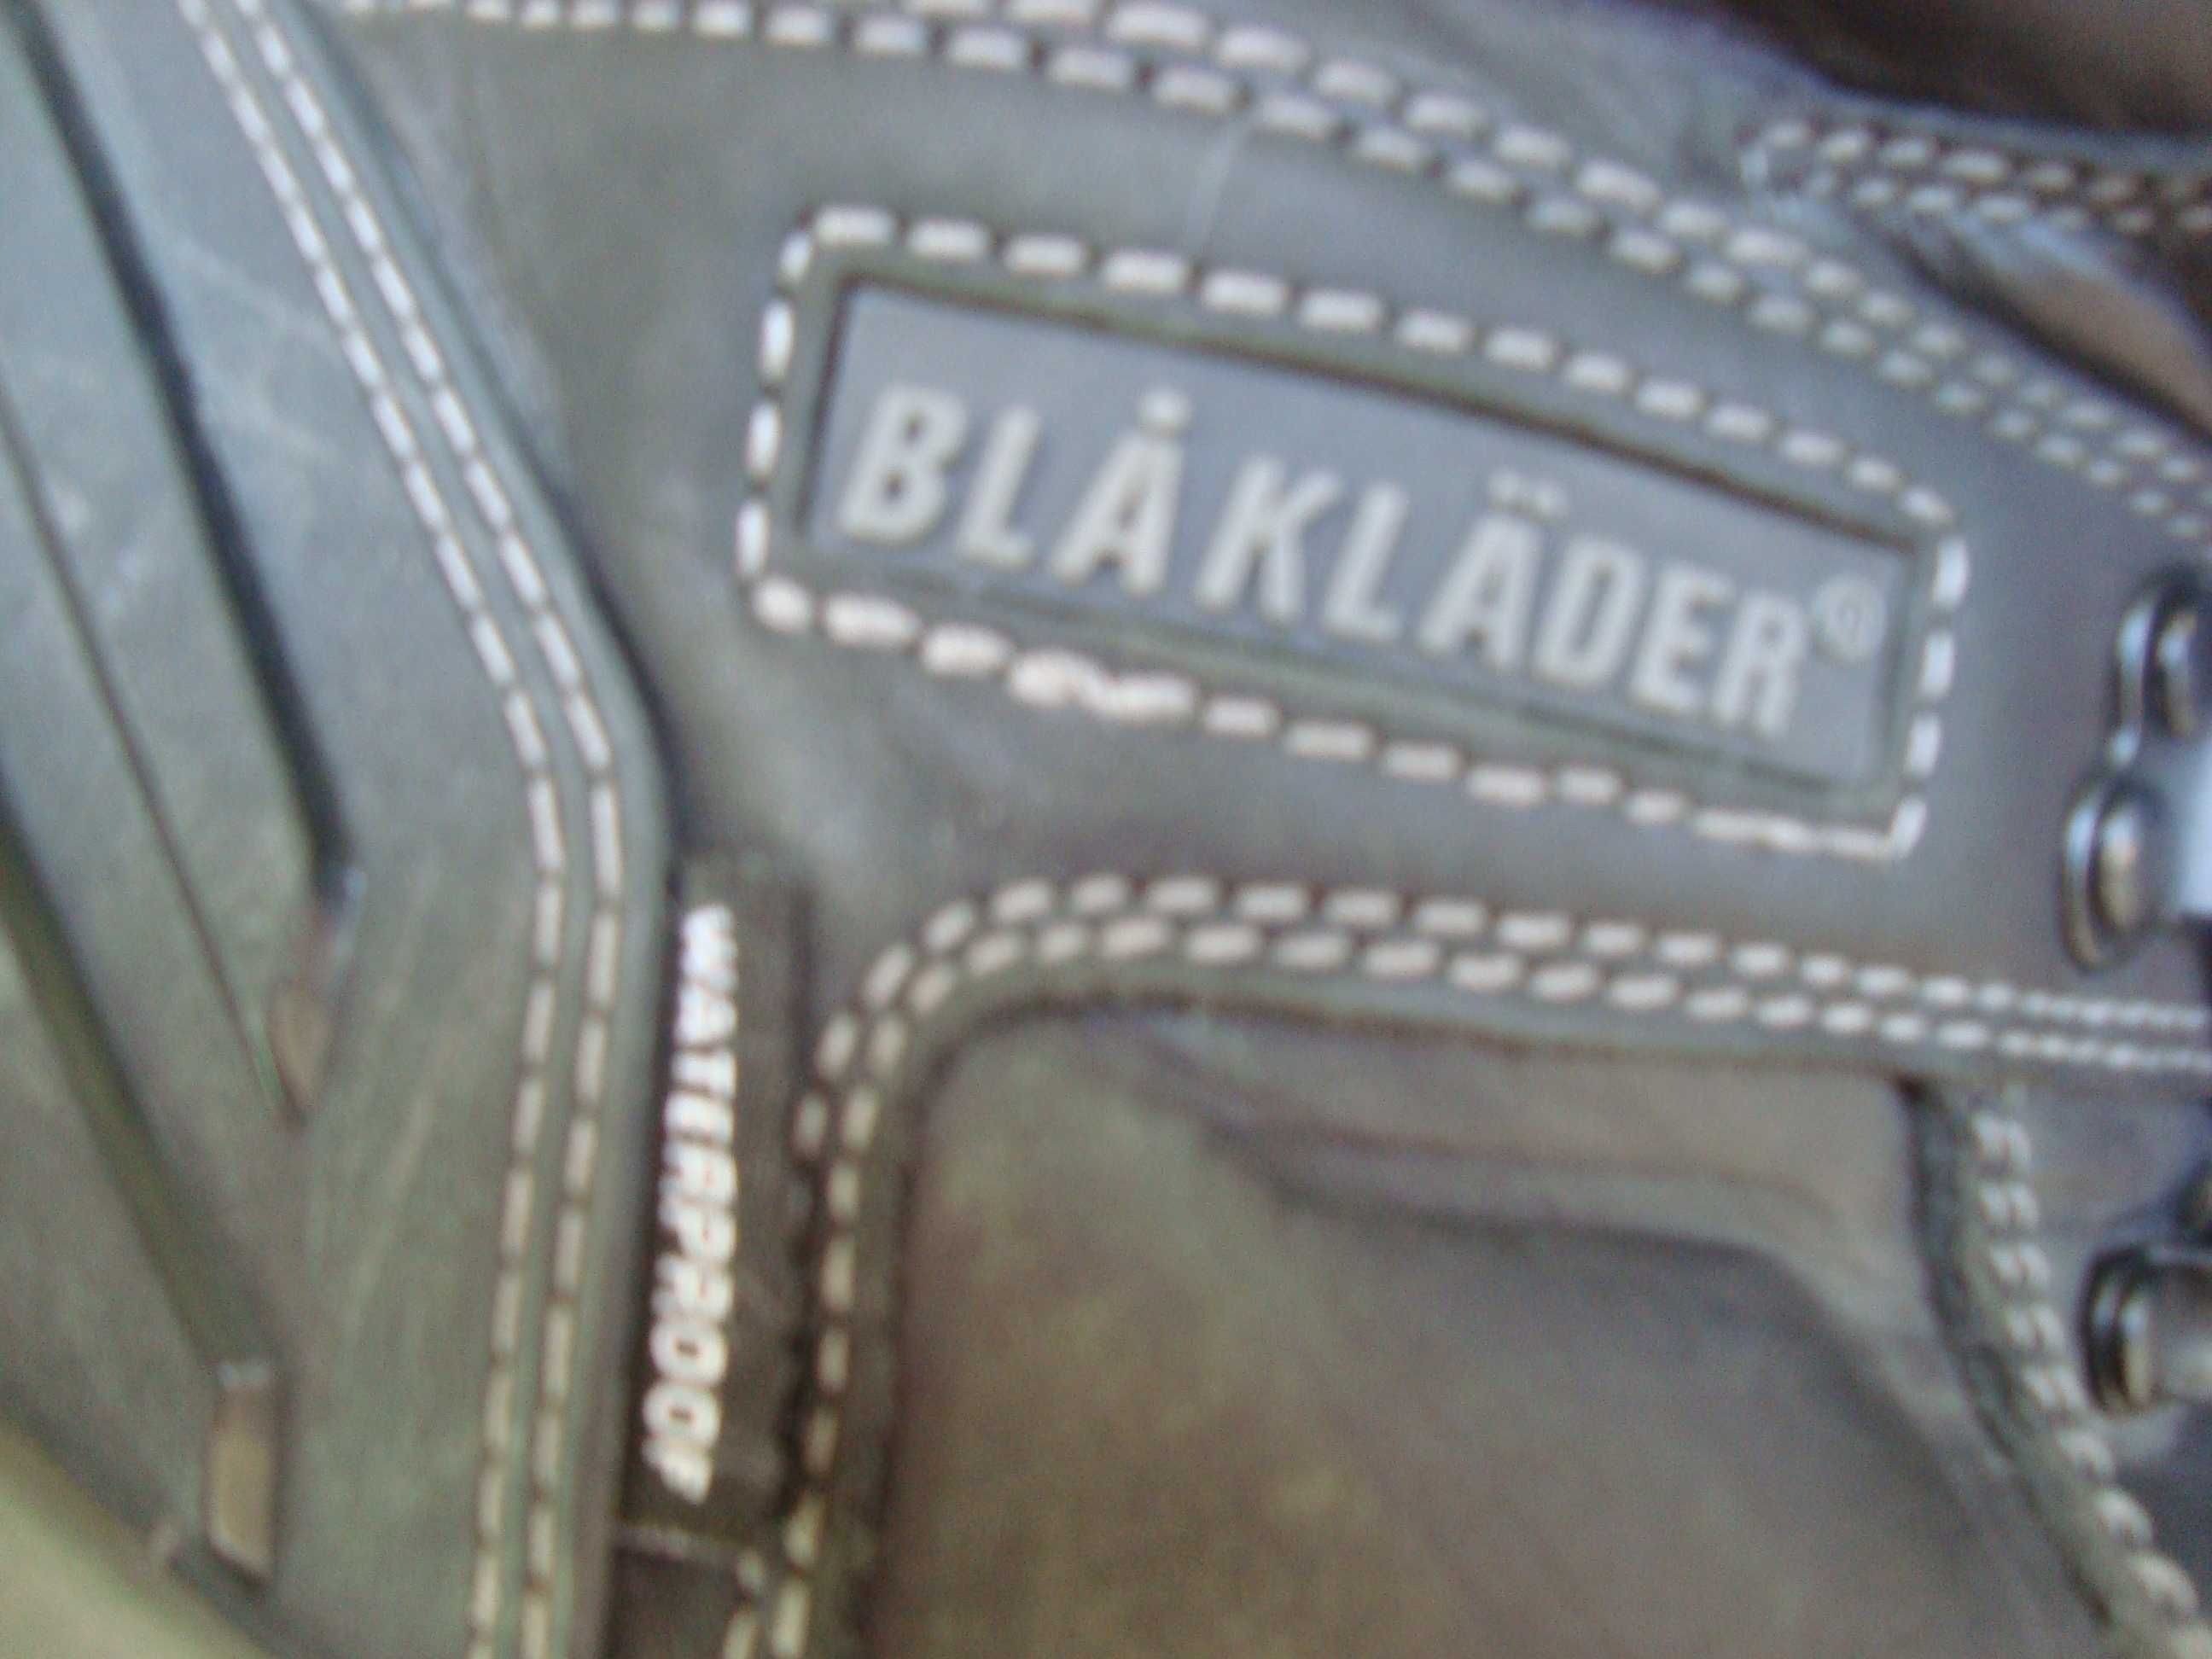 buty zimowe wysokie BLakleader 44-ocieplone Super